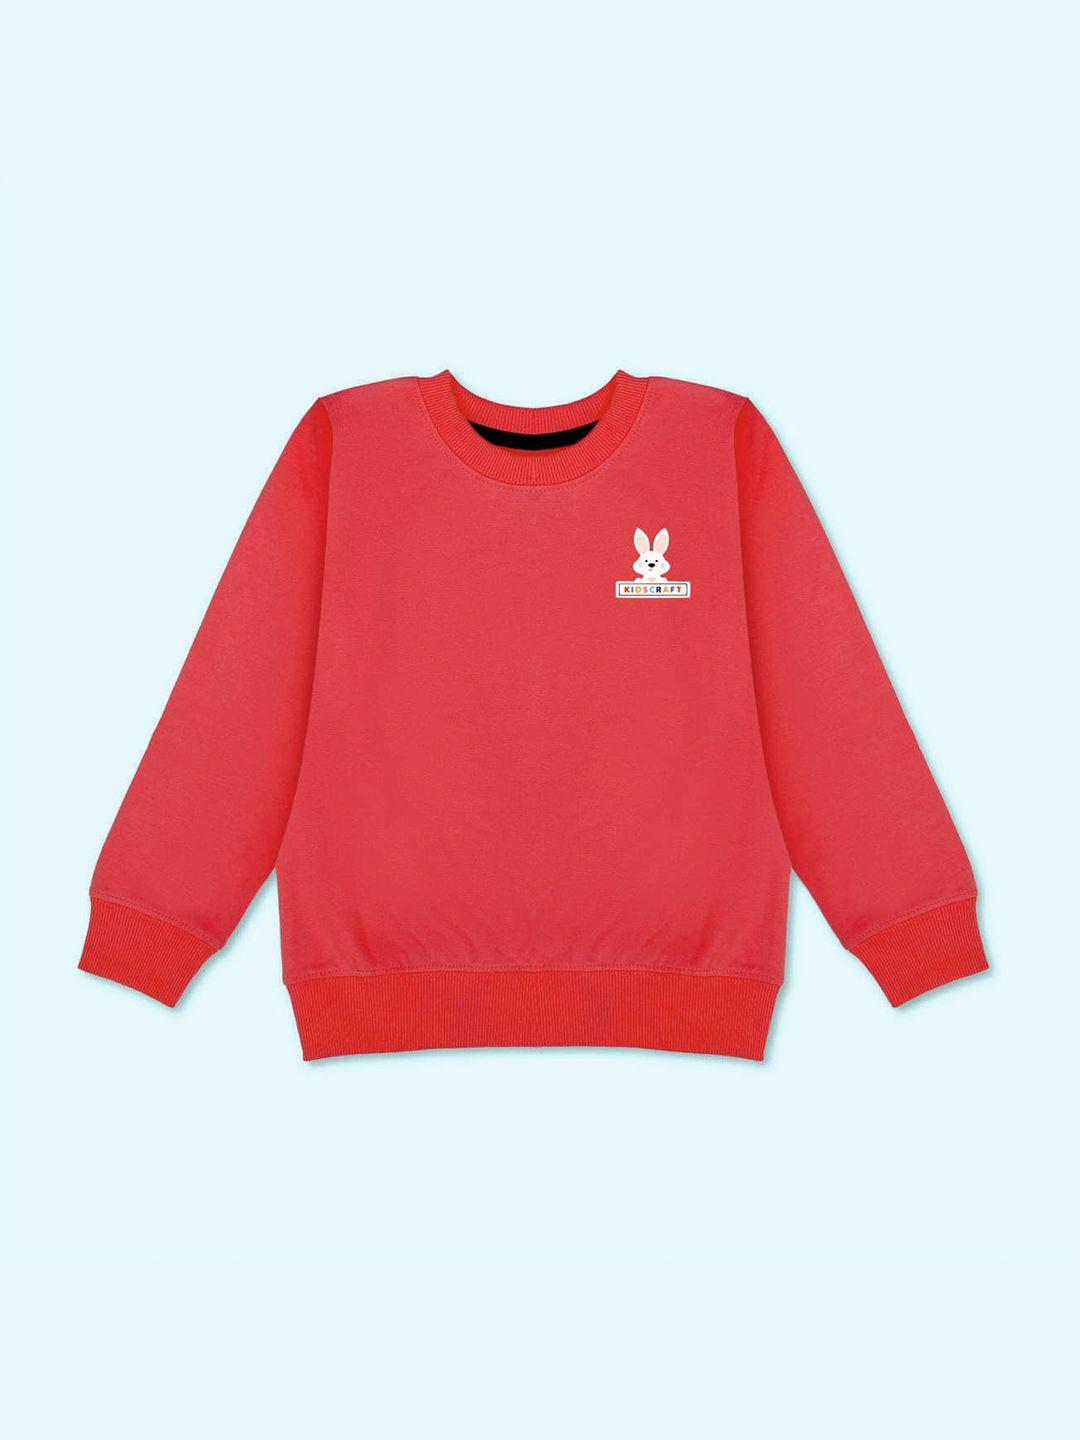 kidscraft-boys-red-sweatshirt